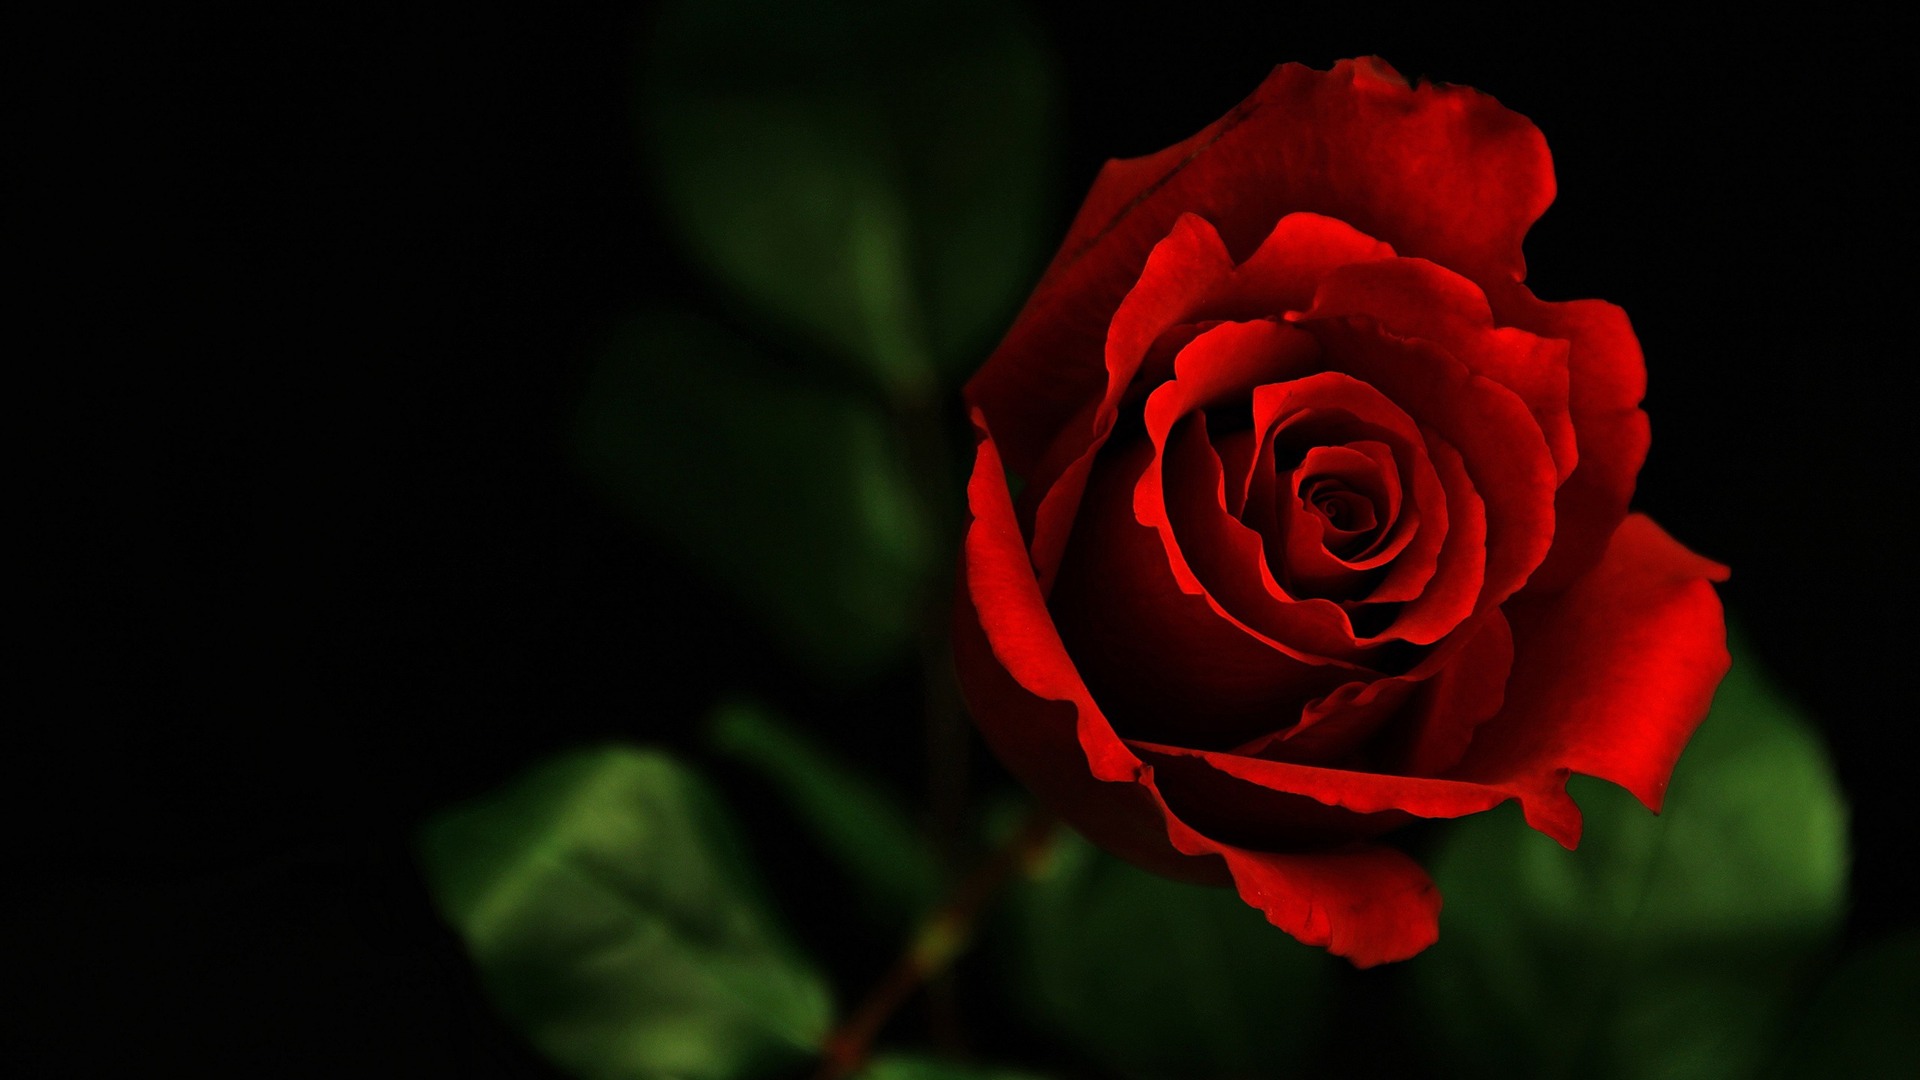 Dark red rose photography wallpaper 1080p